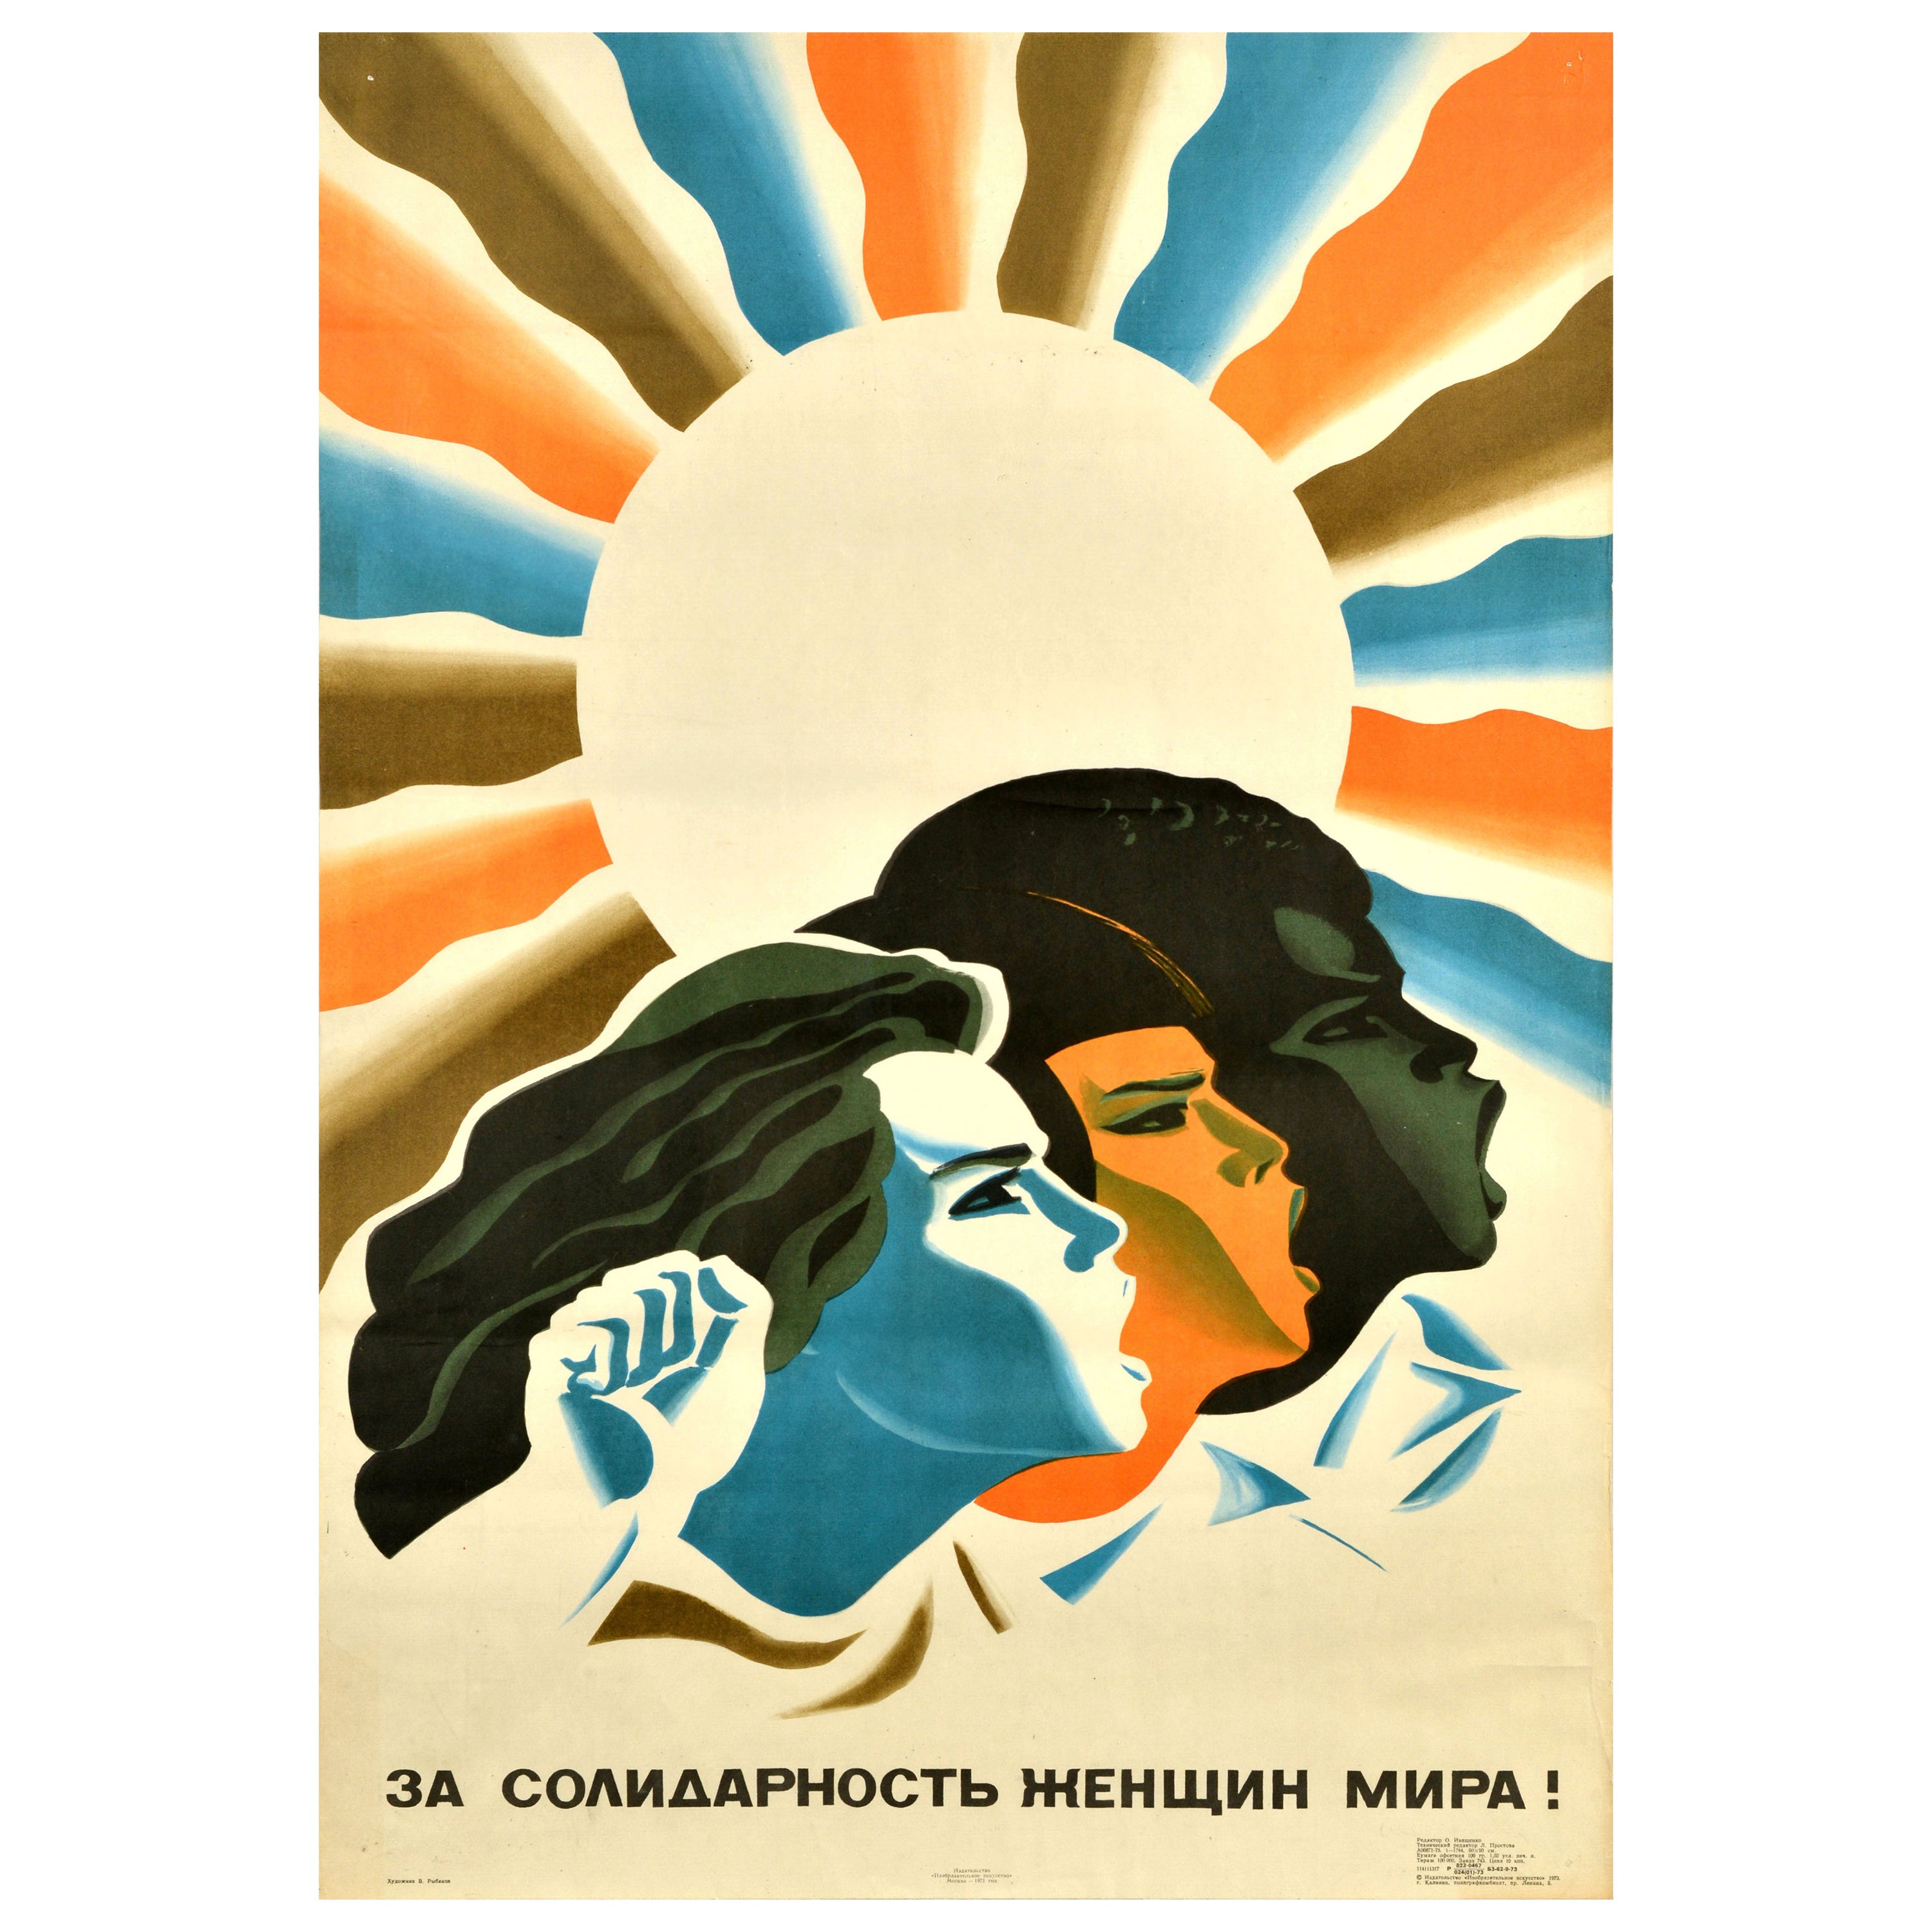 Originales Original-Vintage-Propagandaplakat der Sowjetischen Union, Frauen Solidarity, Feminismus, UdSSR